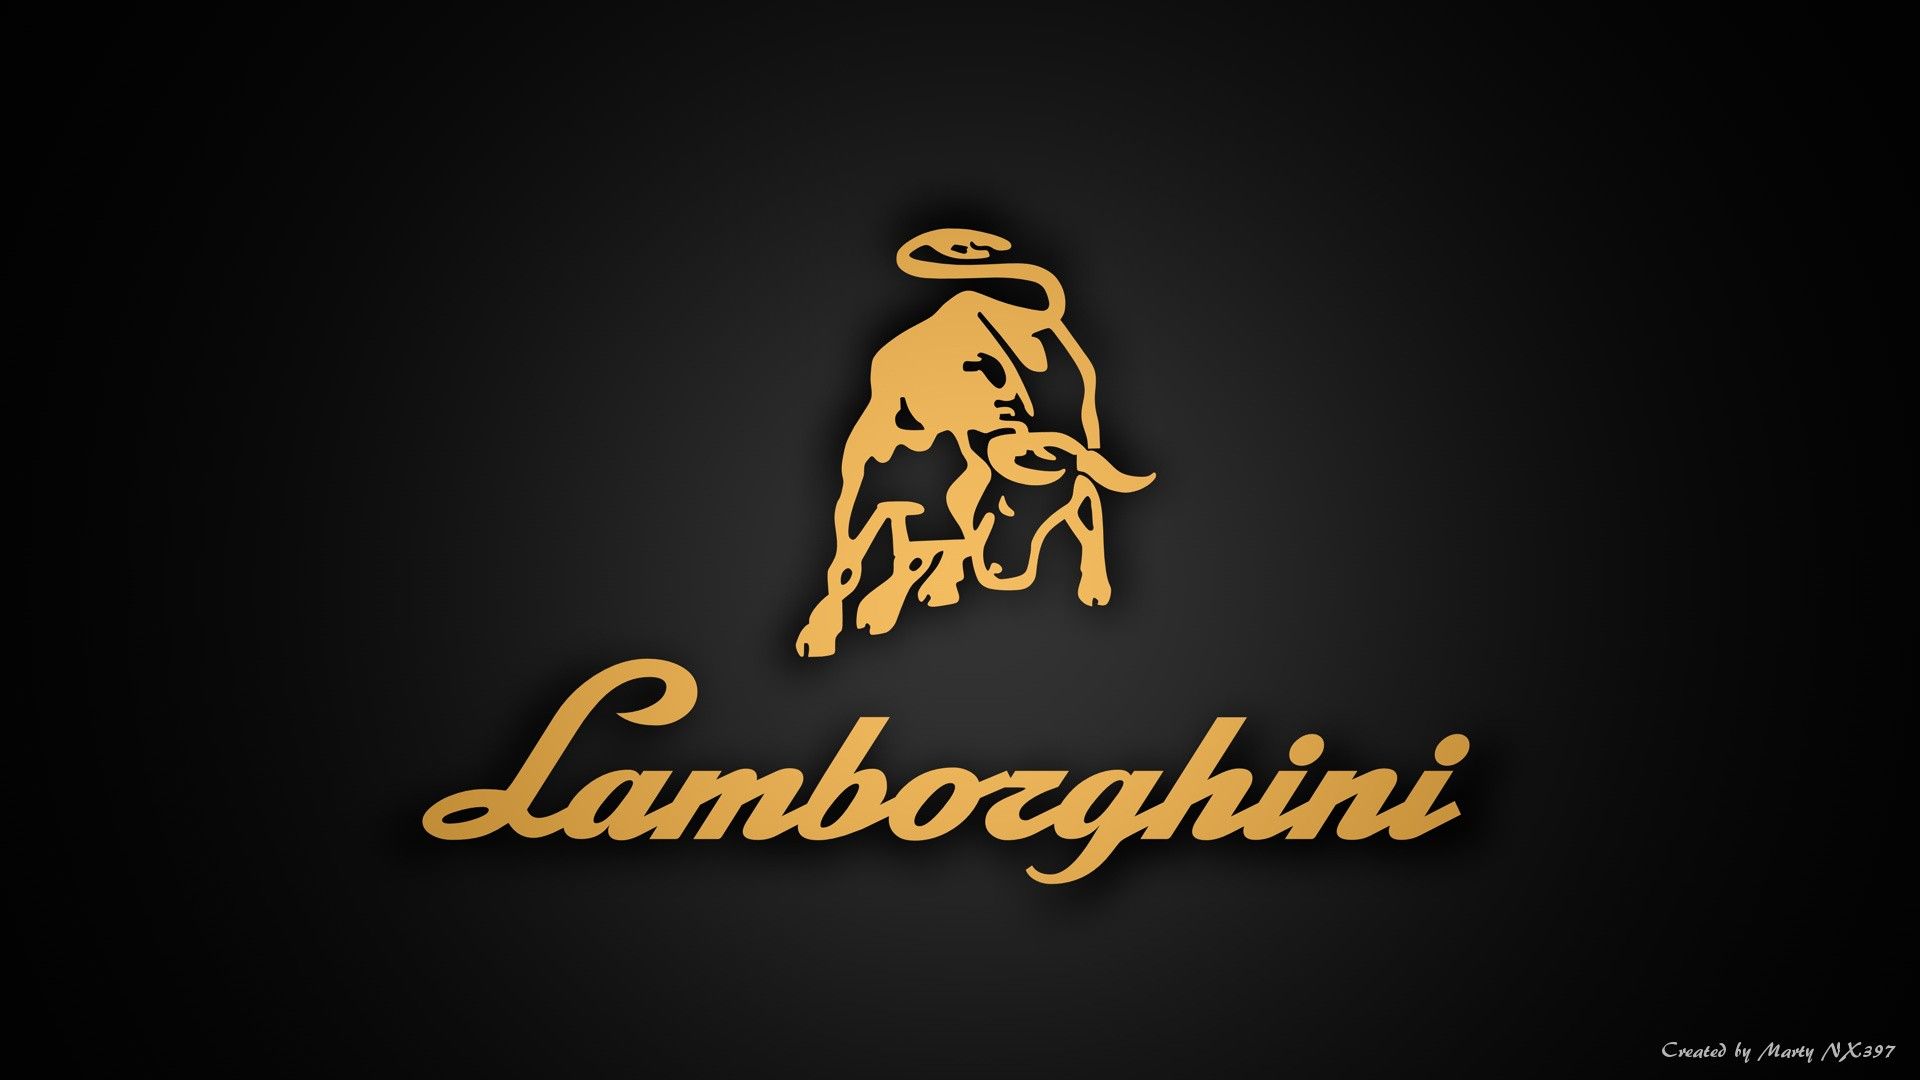 HD Lamborghini Logo Pictures Of Cars